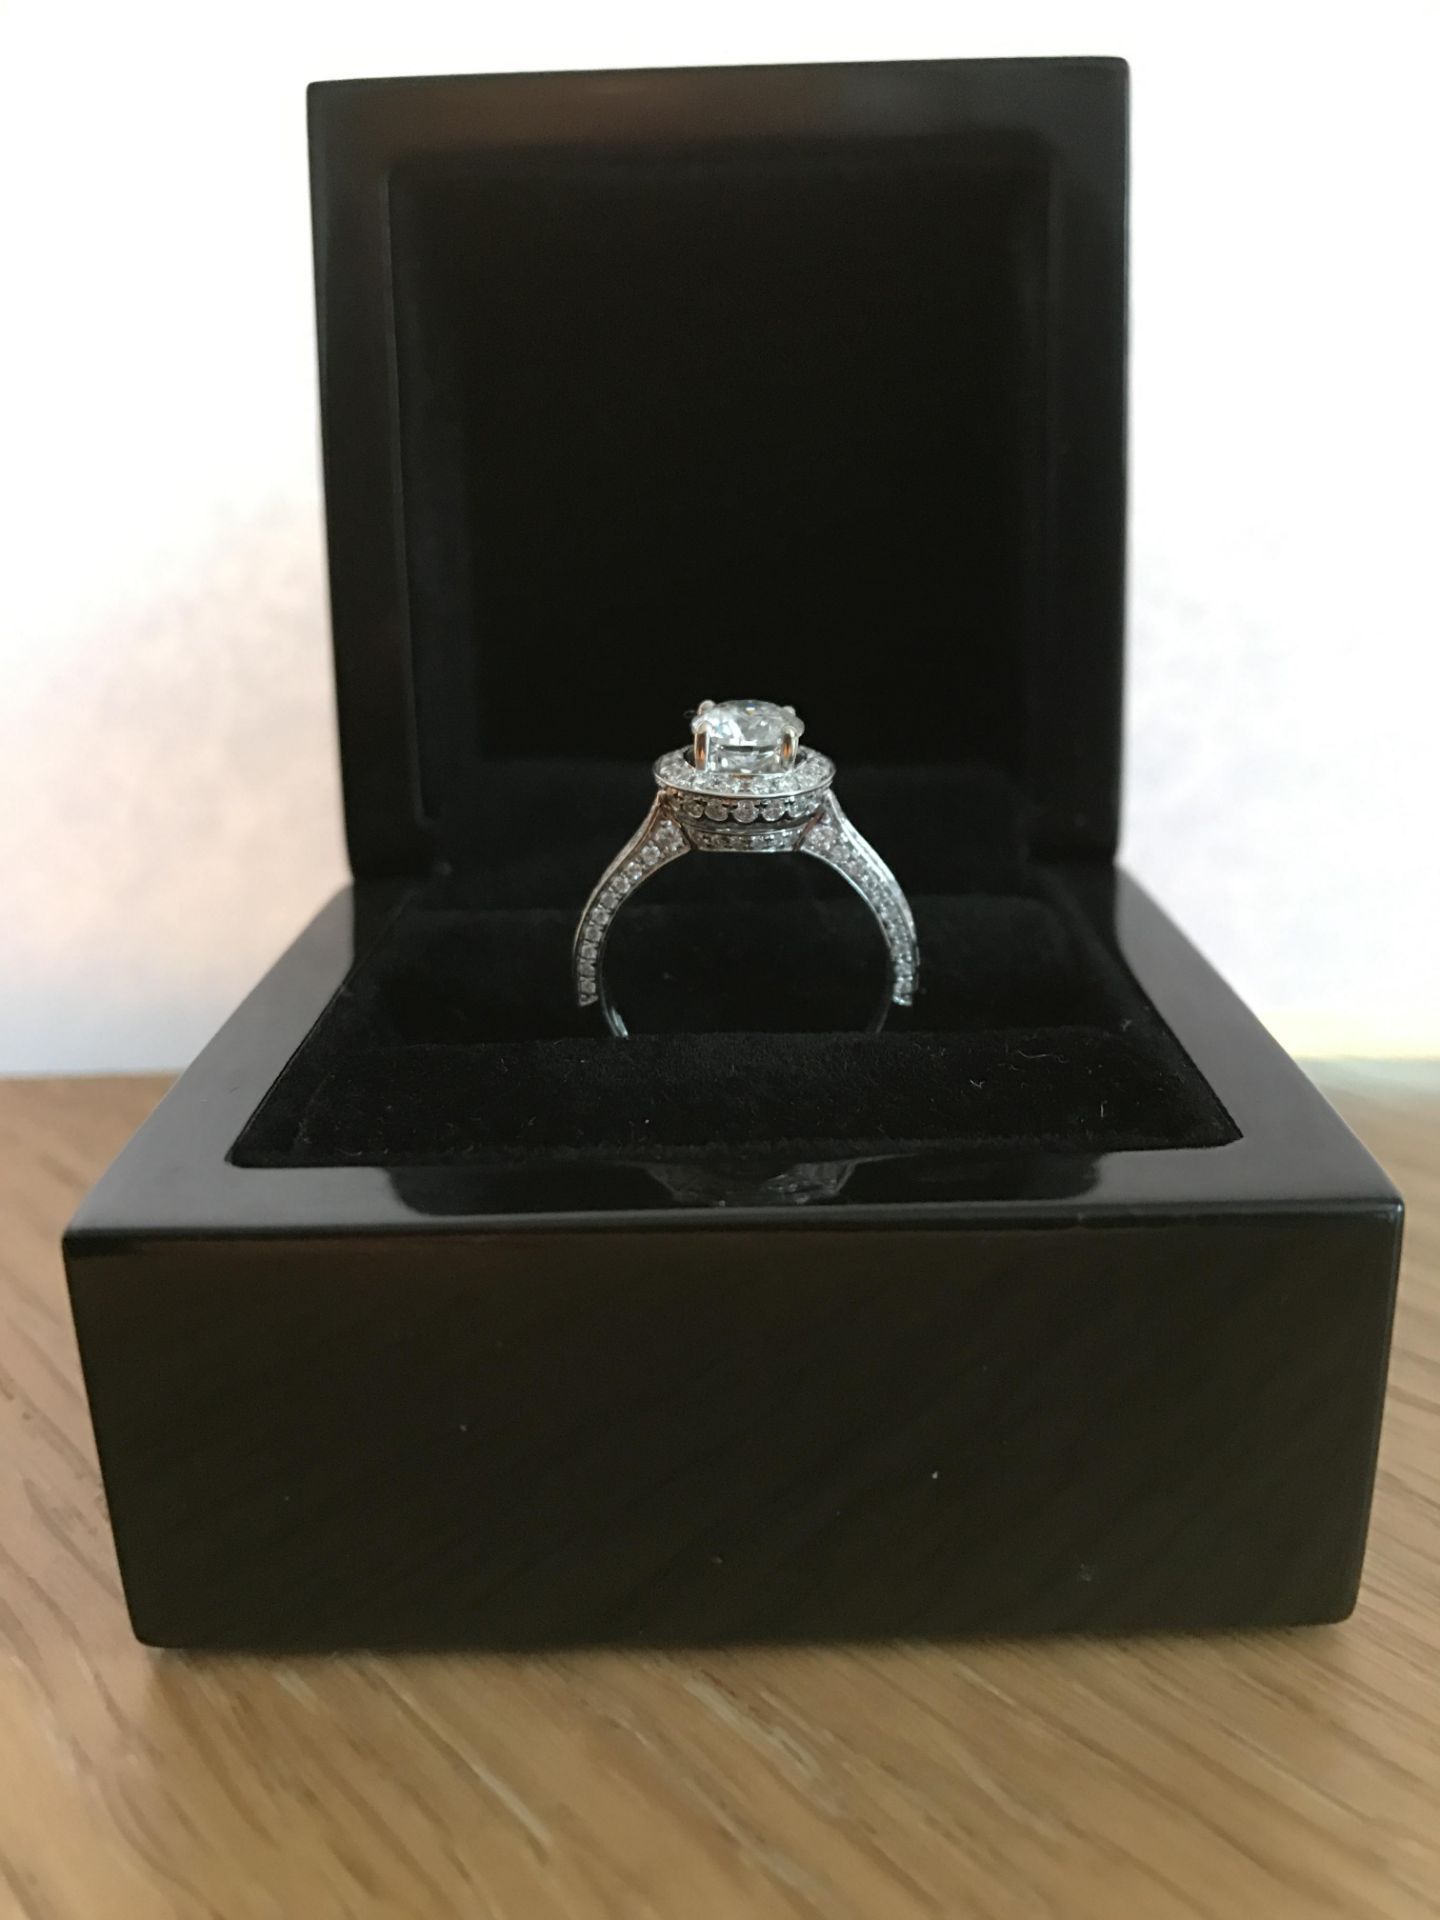 18 Carat White Gold Diamond Engagement Ring - Unworn 10/10 Condition - Image 12 of 18